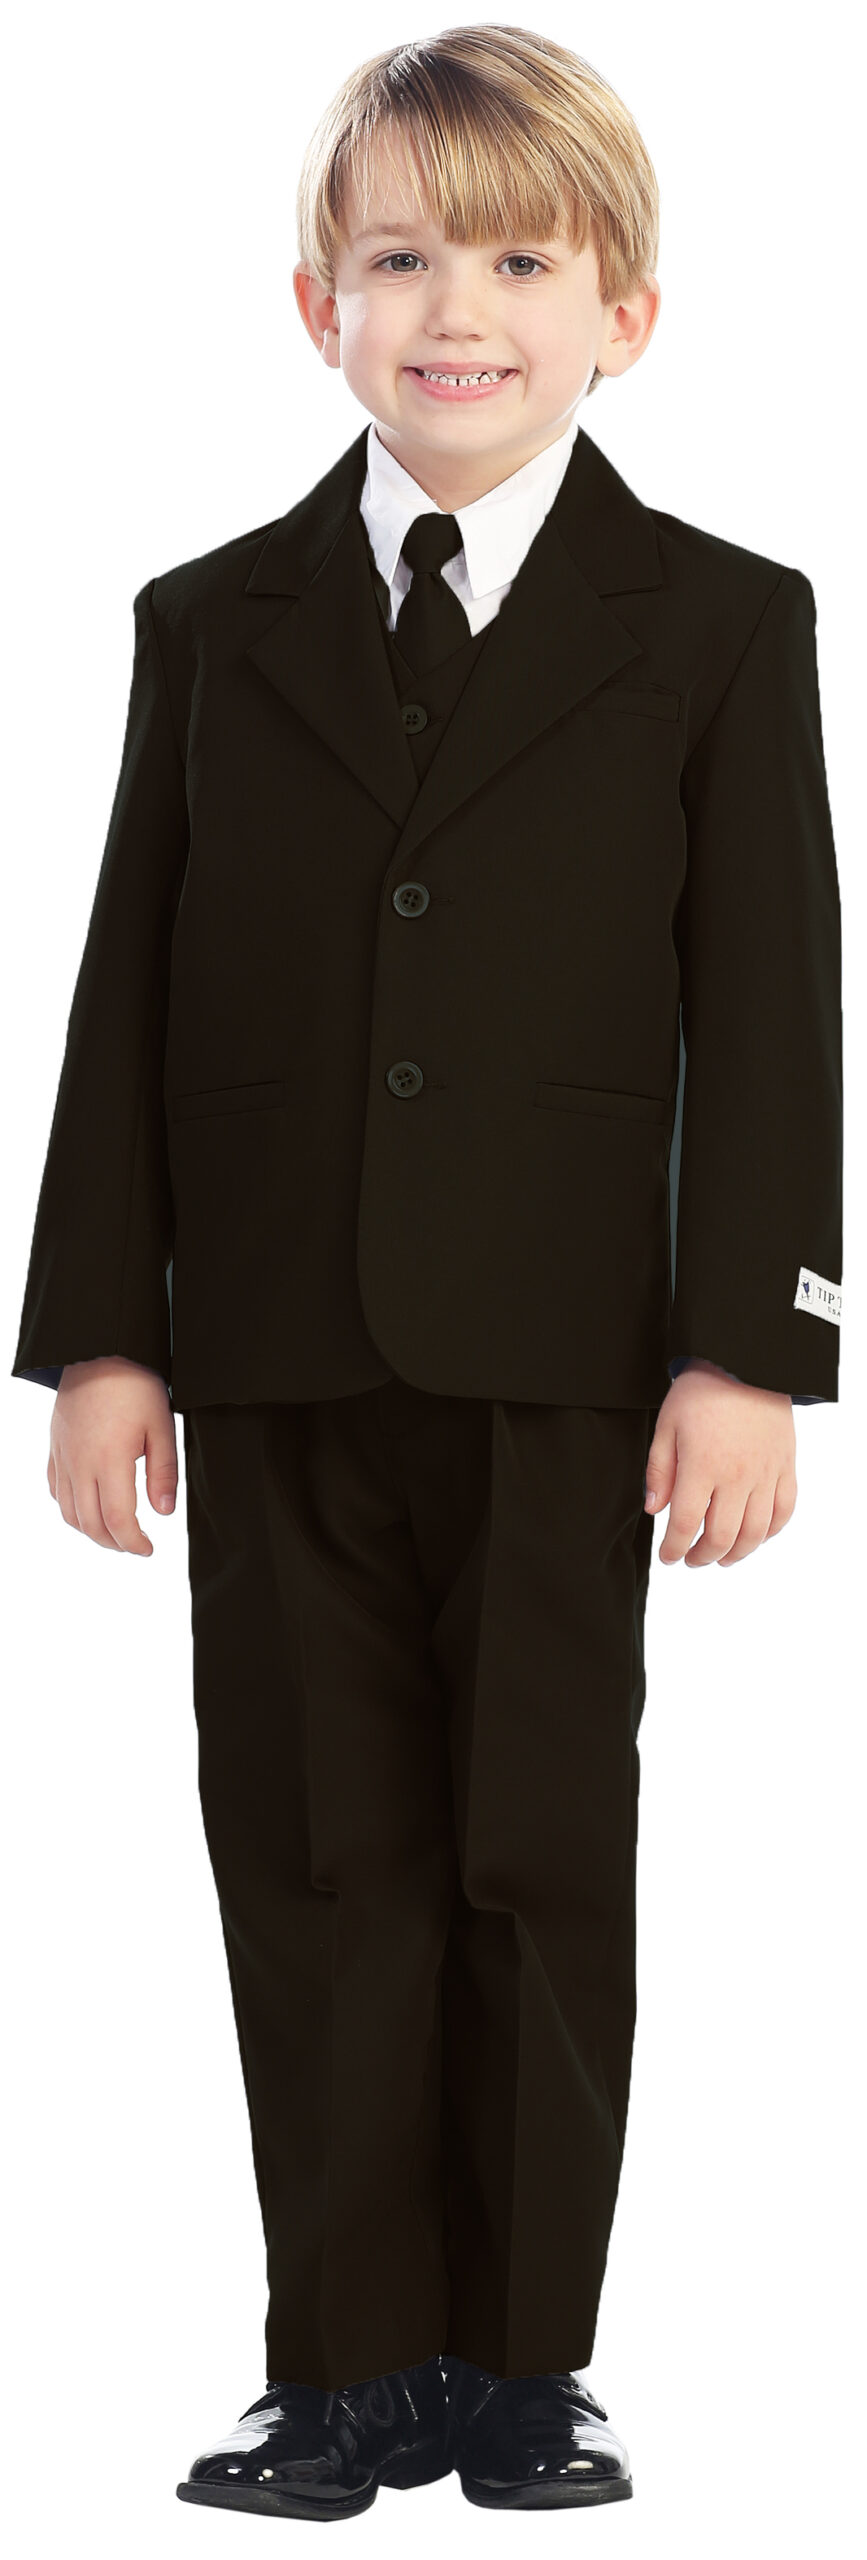 Avery Hill 5-Piece Boy's 2-Button Dress Suit Full-Back Vest - Brown M (6 - 12 Months)